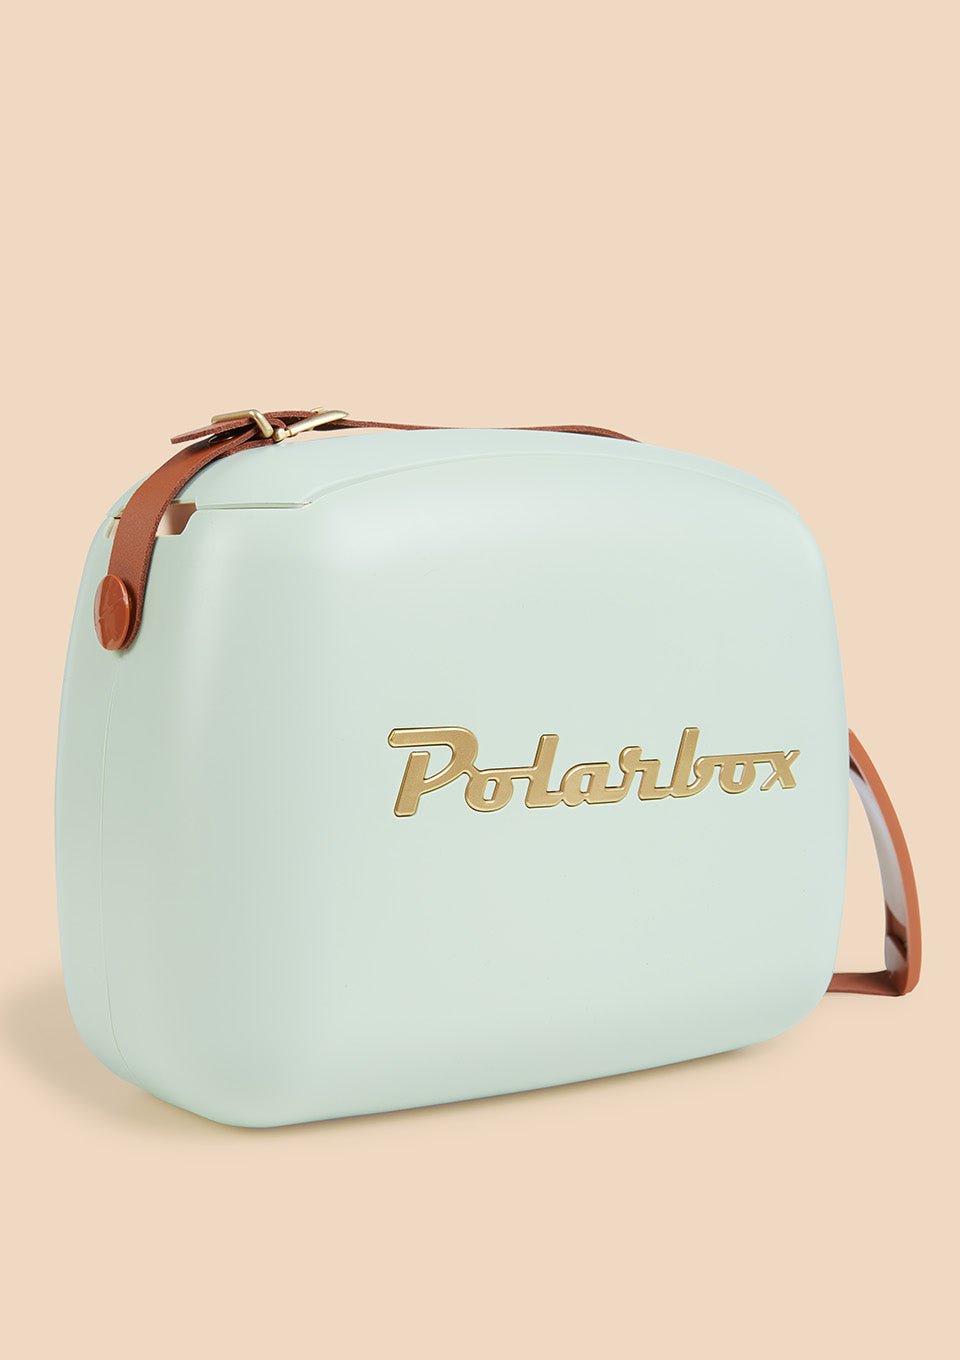 Polarbox Kühlbox 6L Retro Vintage Design "Matcha Gold" mit 2 Dosen - tiny-boon.com